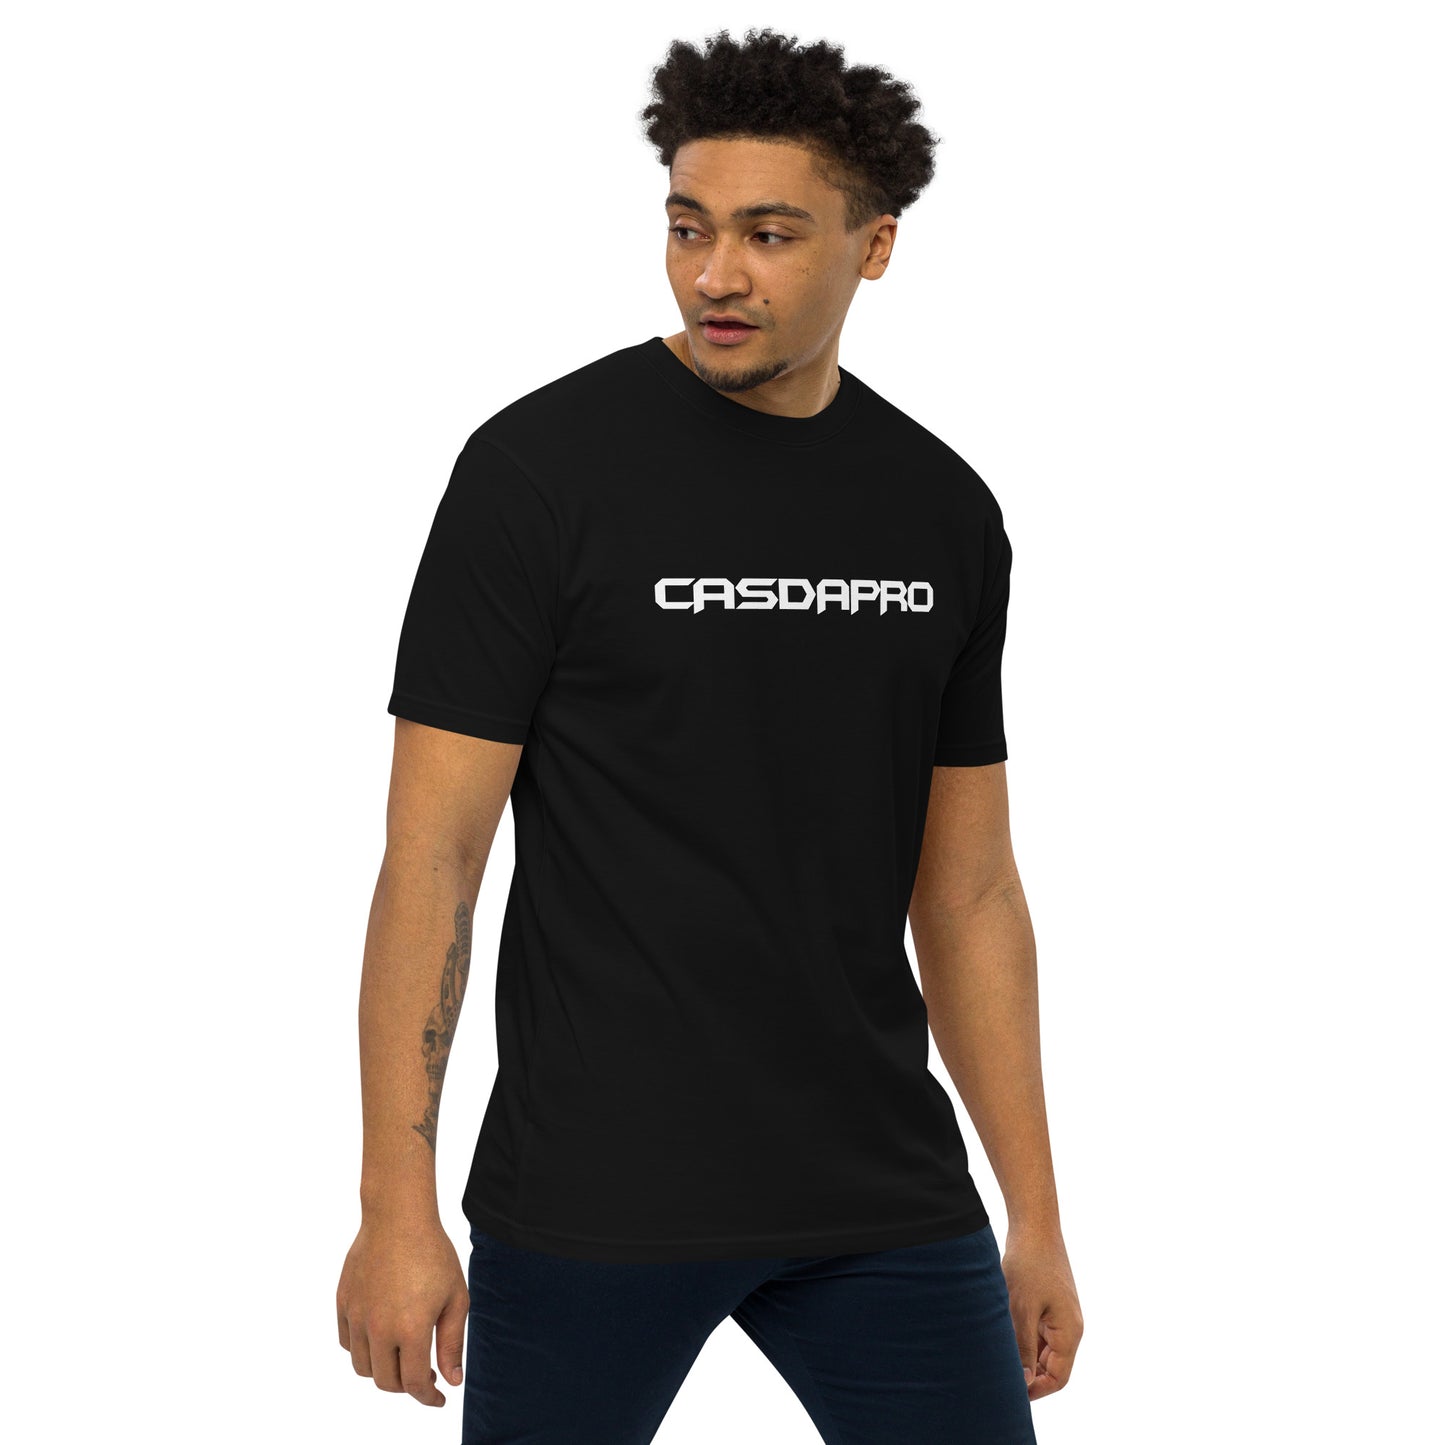 CASDAPRO - Black T-shirt